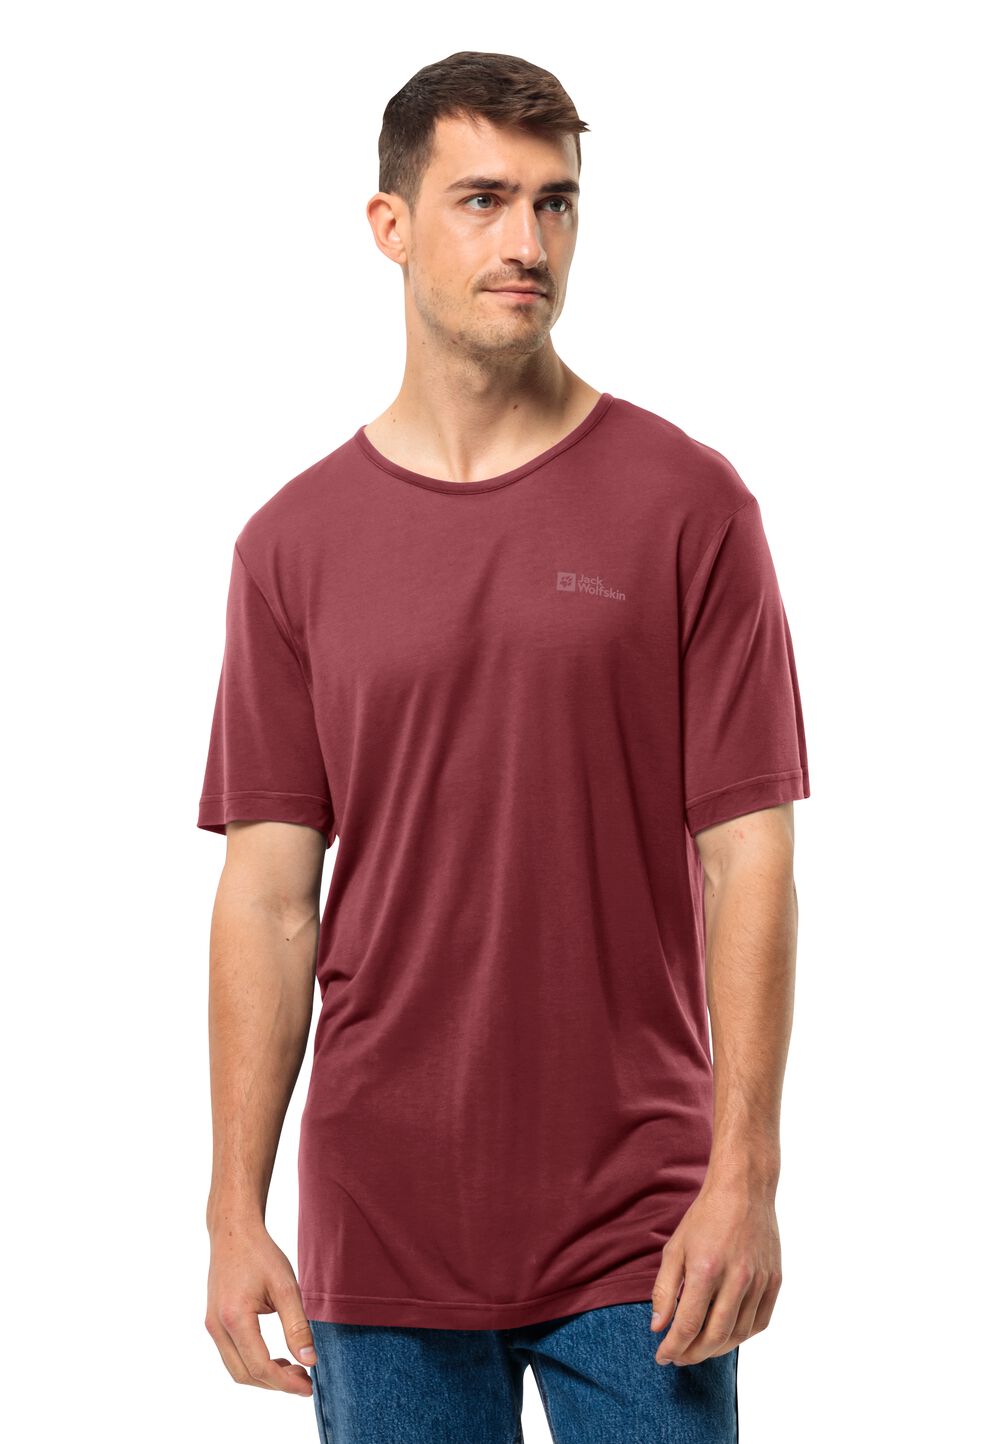 Jack Wolfskin Mola T-Shirt Men Functioneel shirt Heren M purper deep ruby